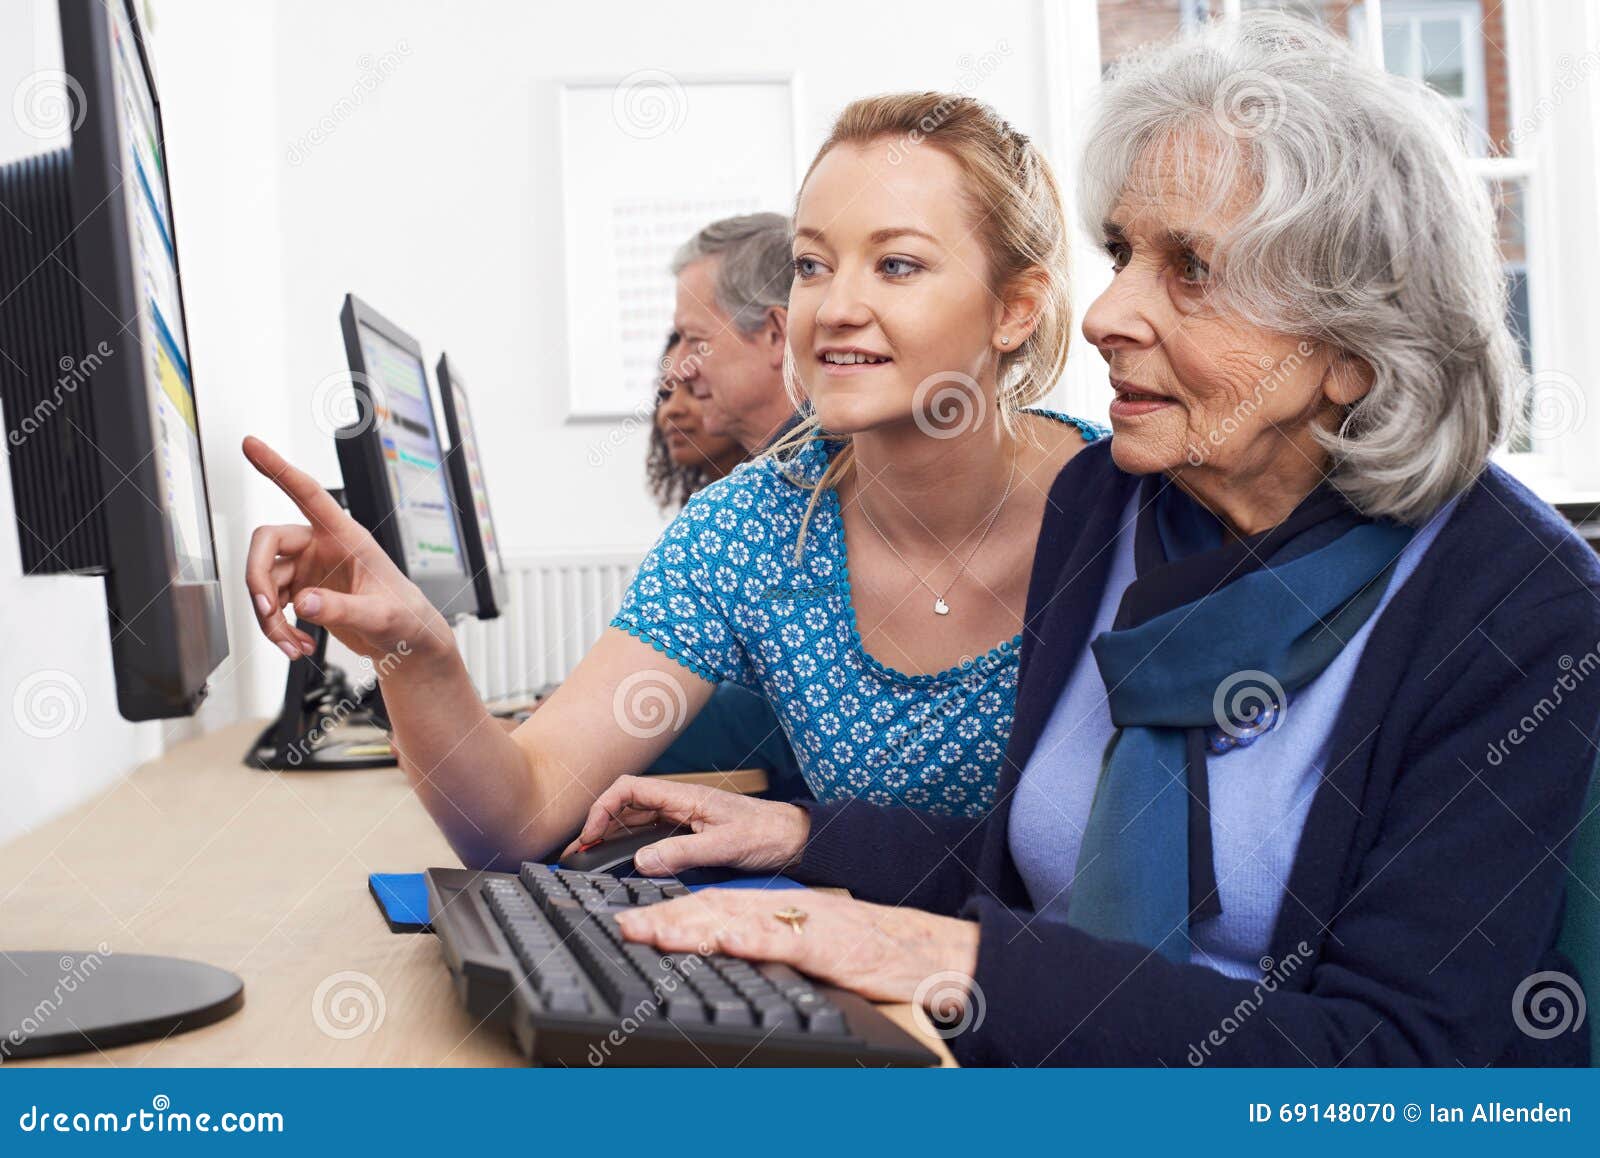 tutor helping senior woman in computer class